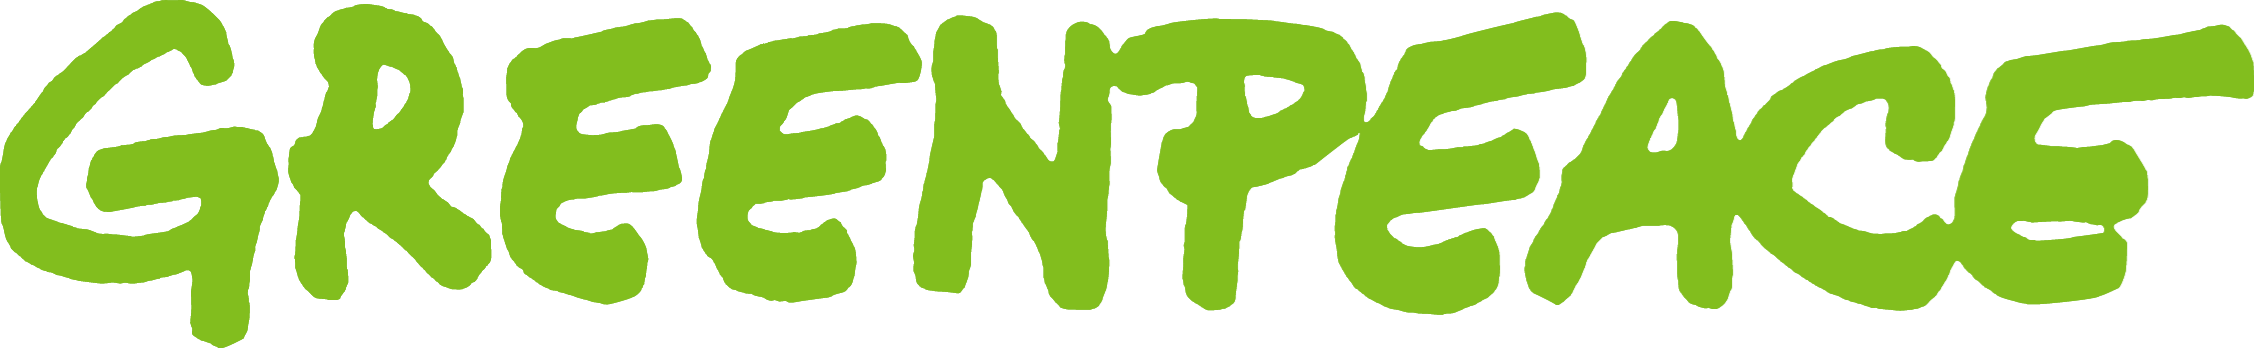 Logo do Greenpeace